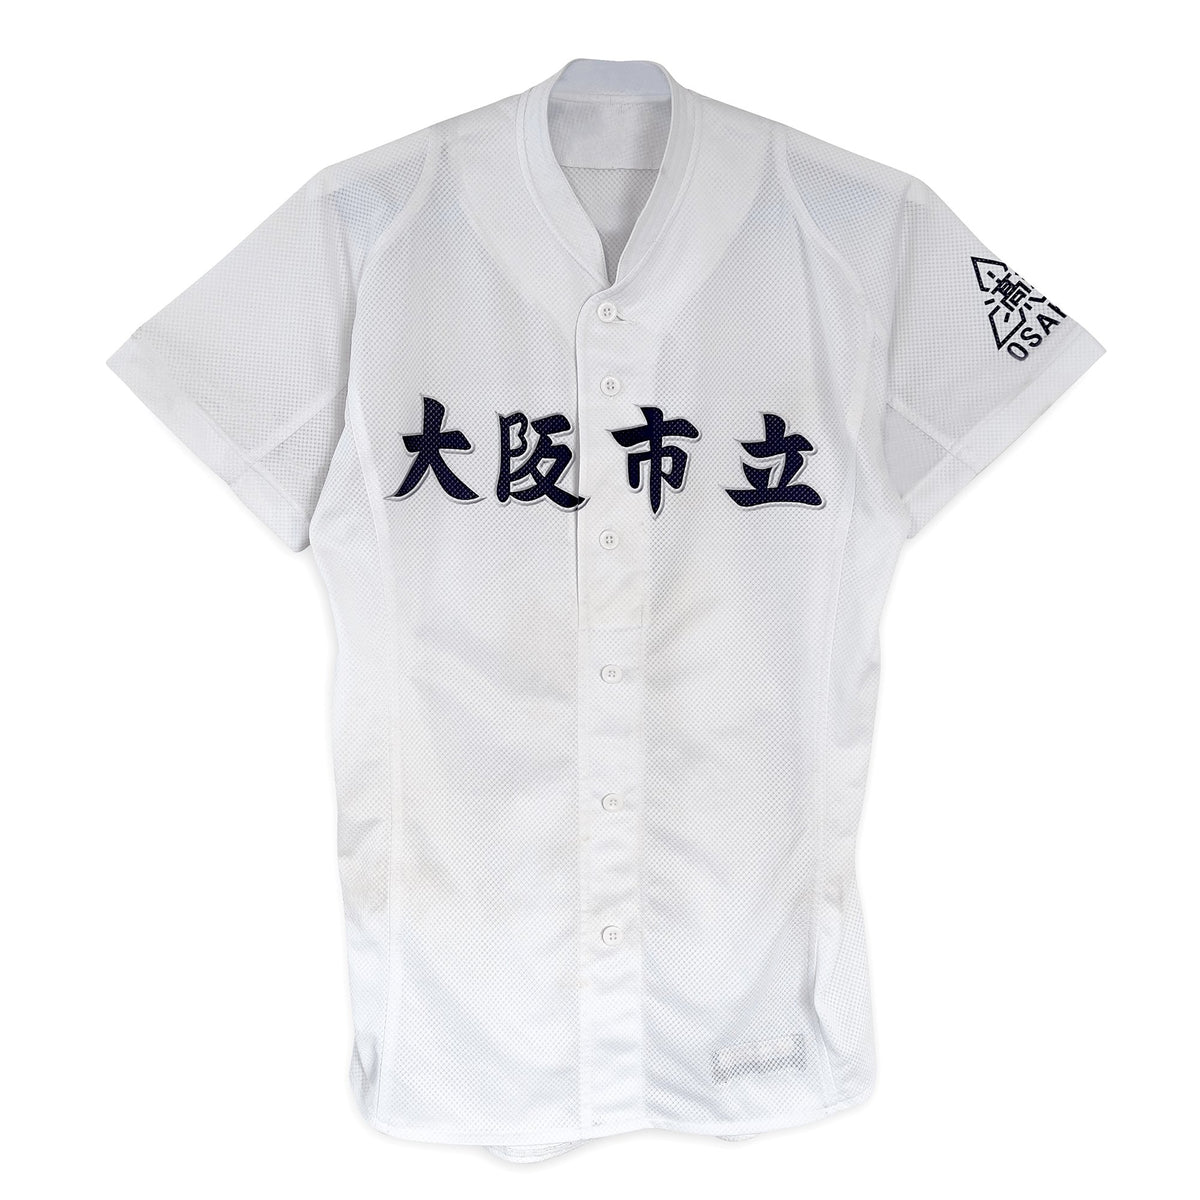 Retro Japan Koshien Ichiritsu Osaka High School Zett Baseball Kanji Jersey - Sugoi JDM